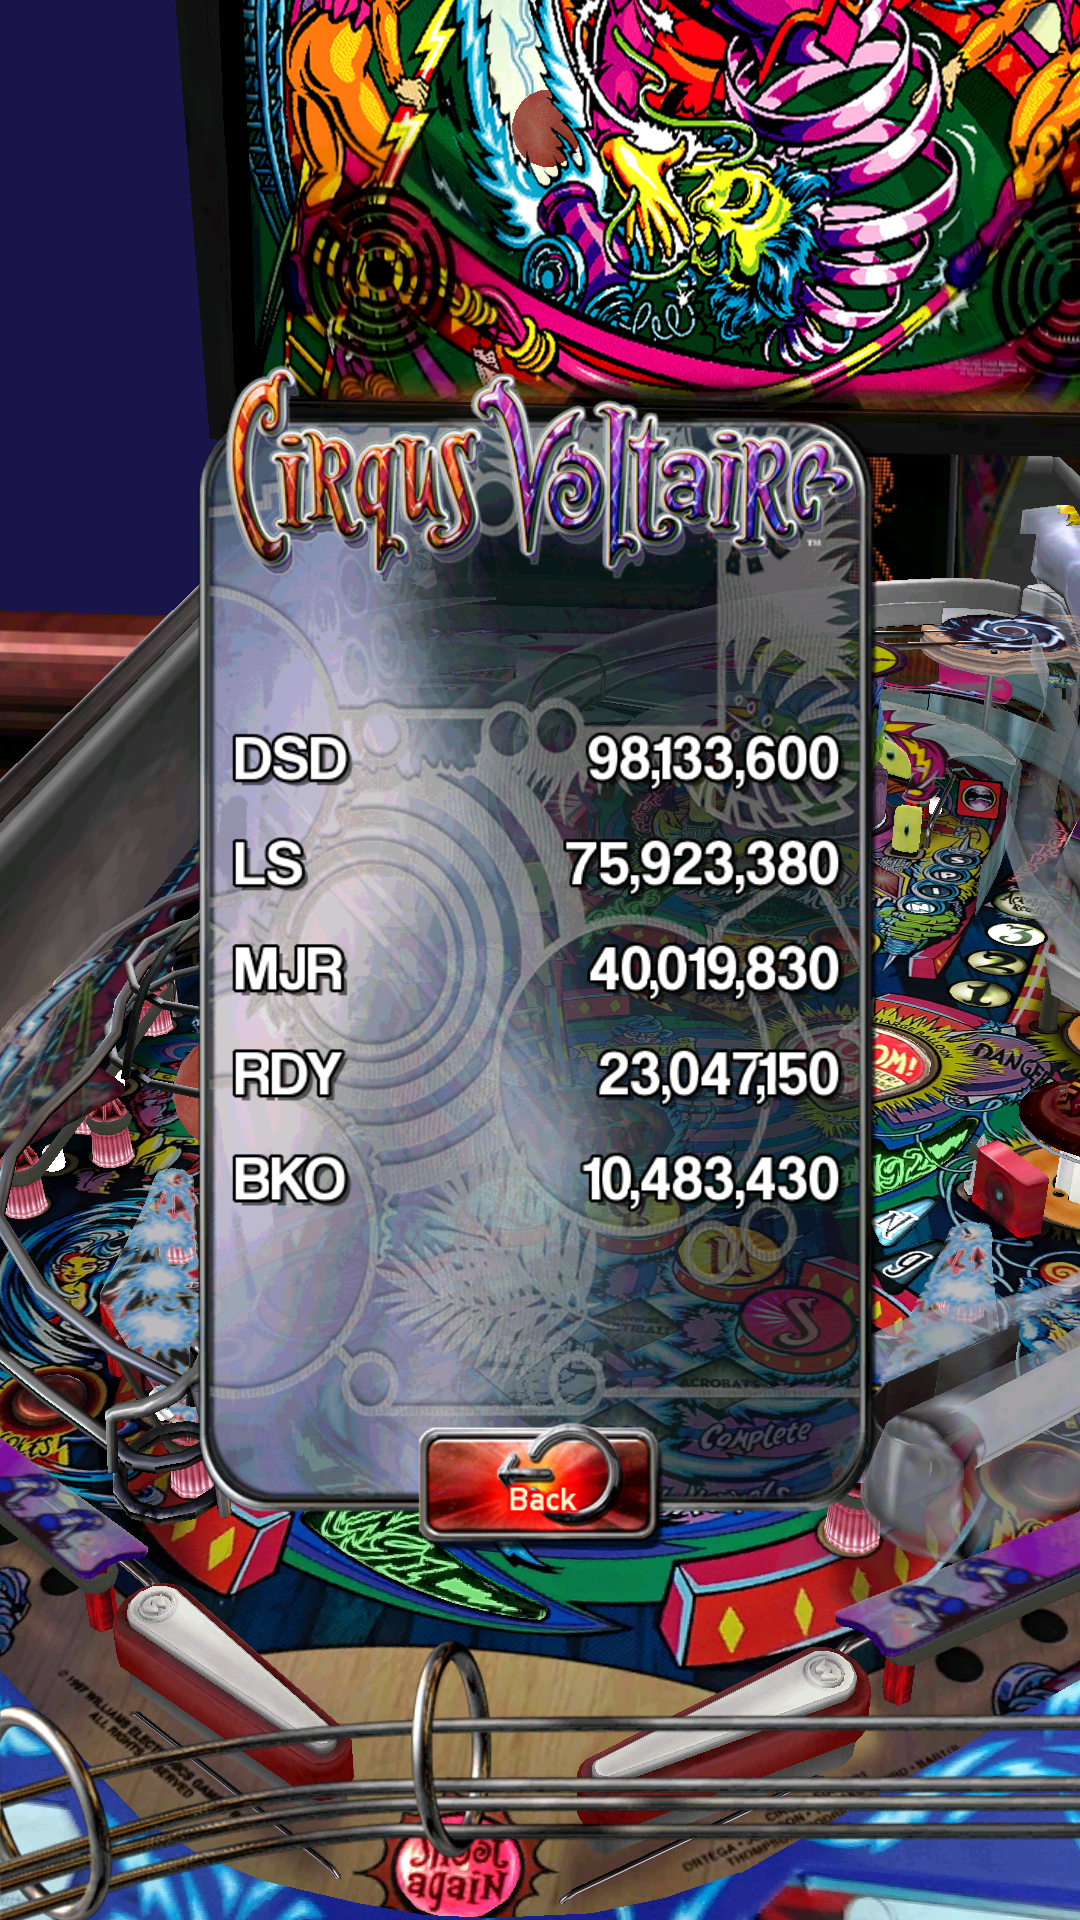 Pinball Arcade: Cirqus Voltaire 98,133,600 points